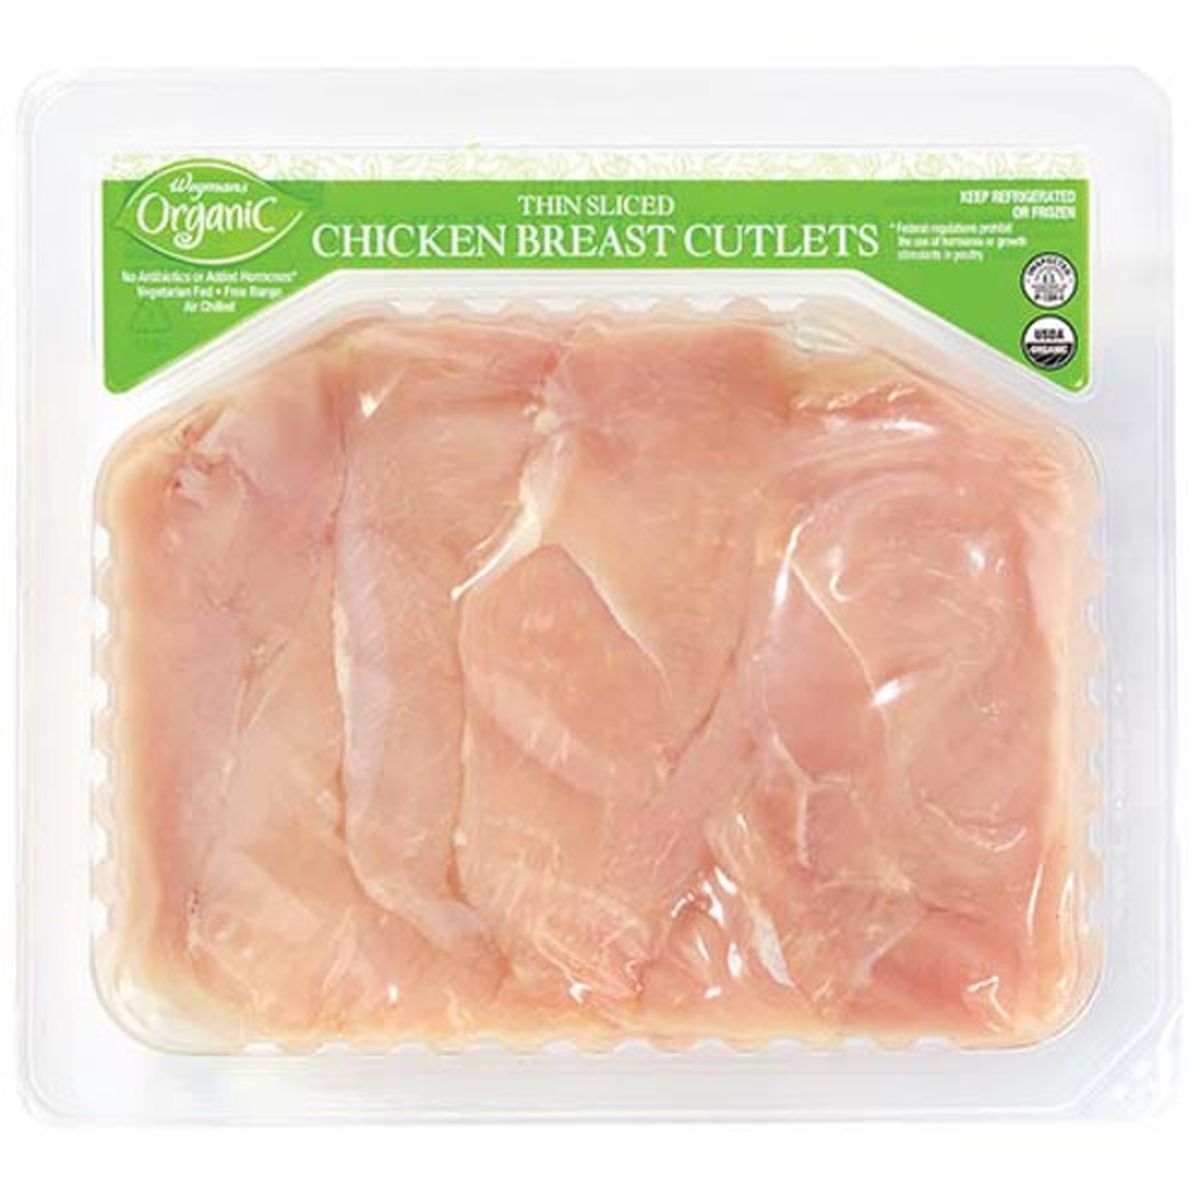 Calories in Wegmans Organic Thin Sliced Chicken Breast Cutlets